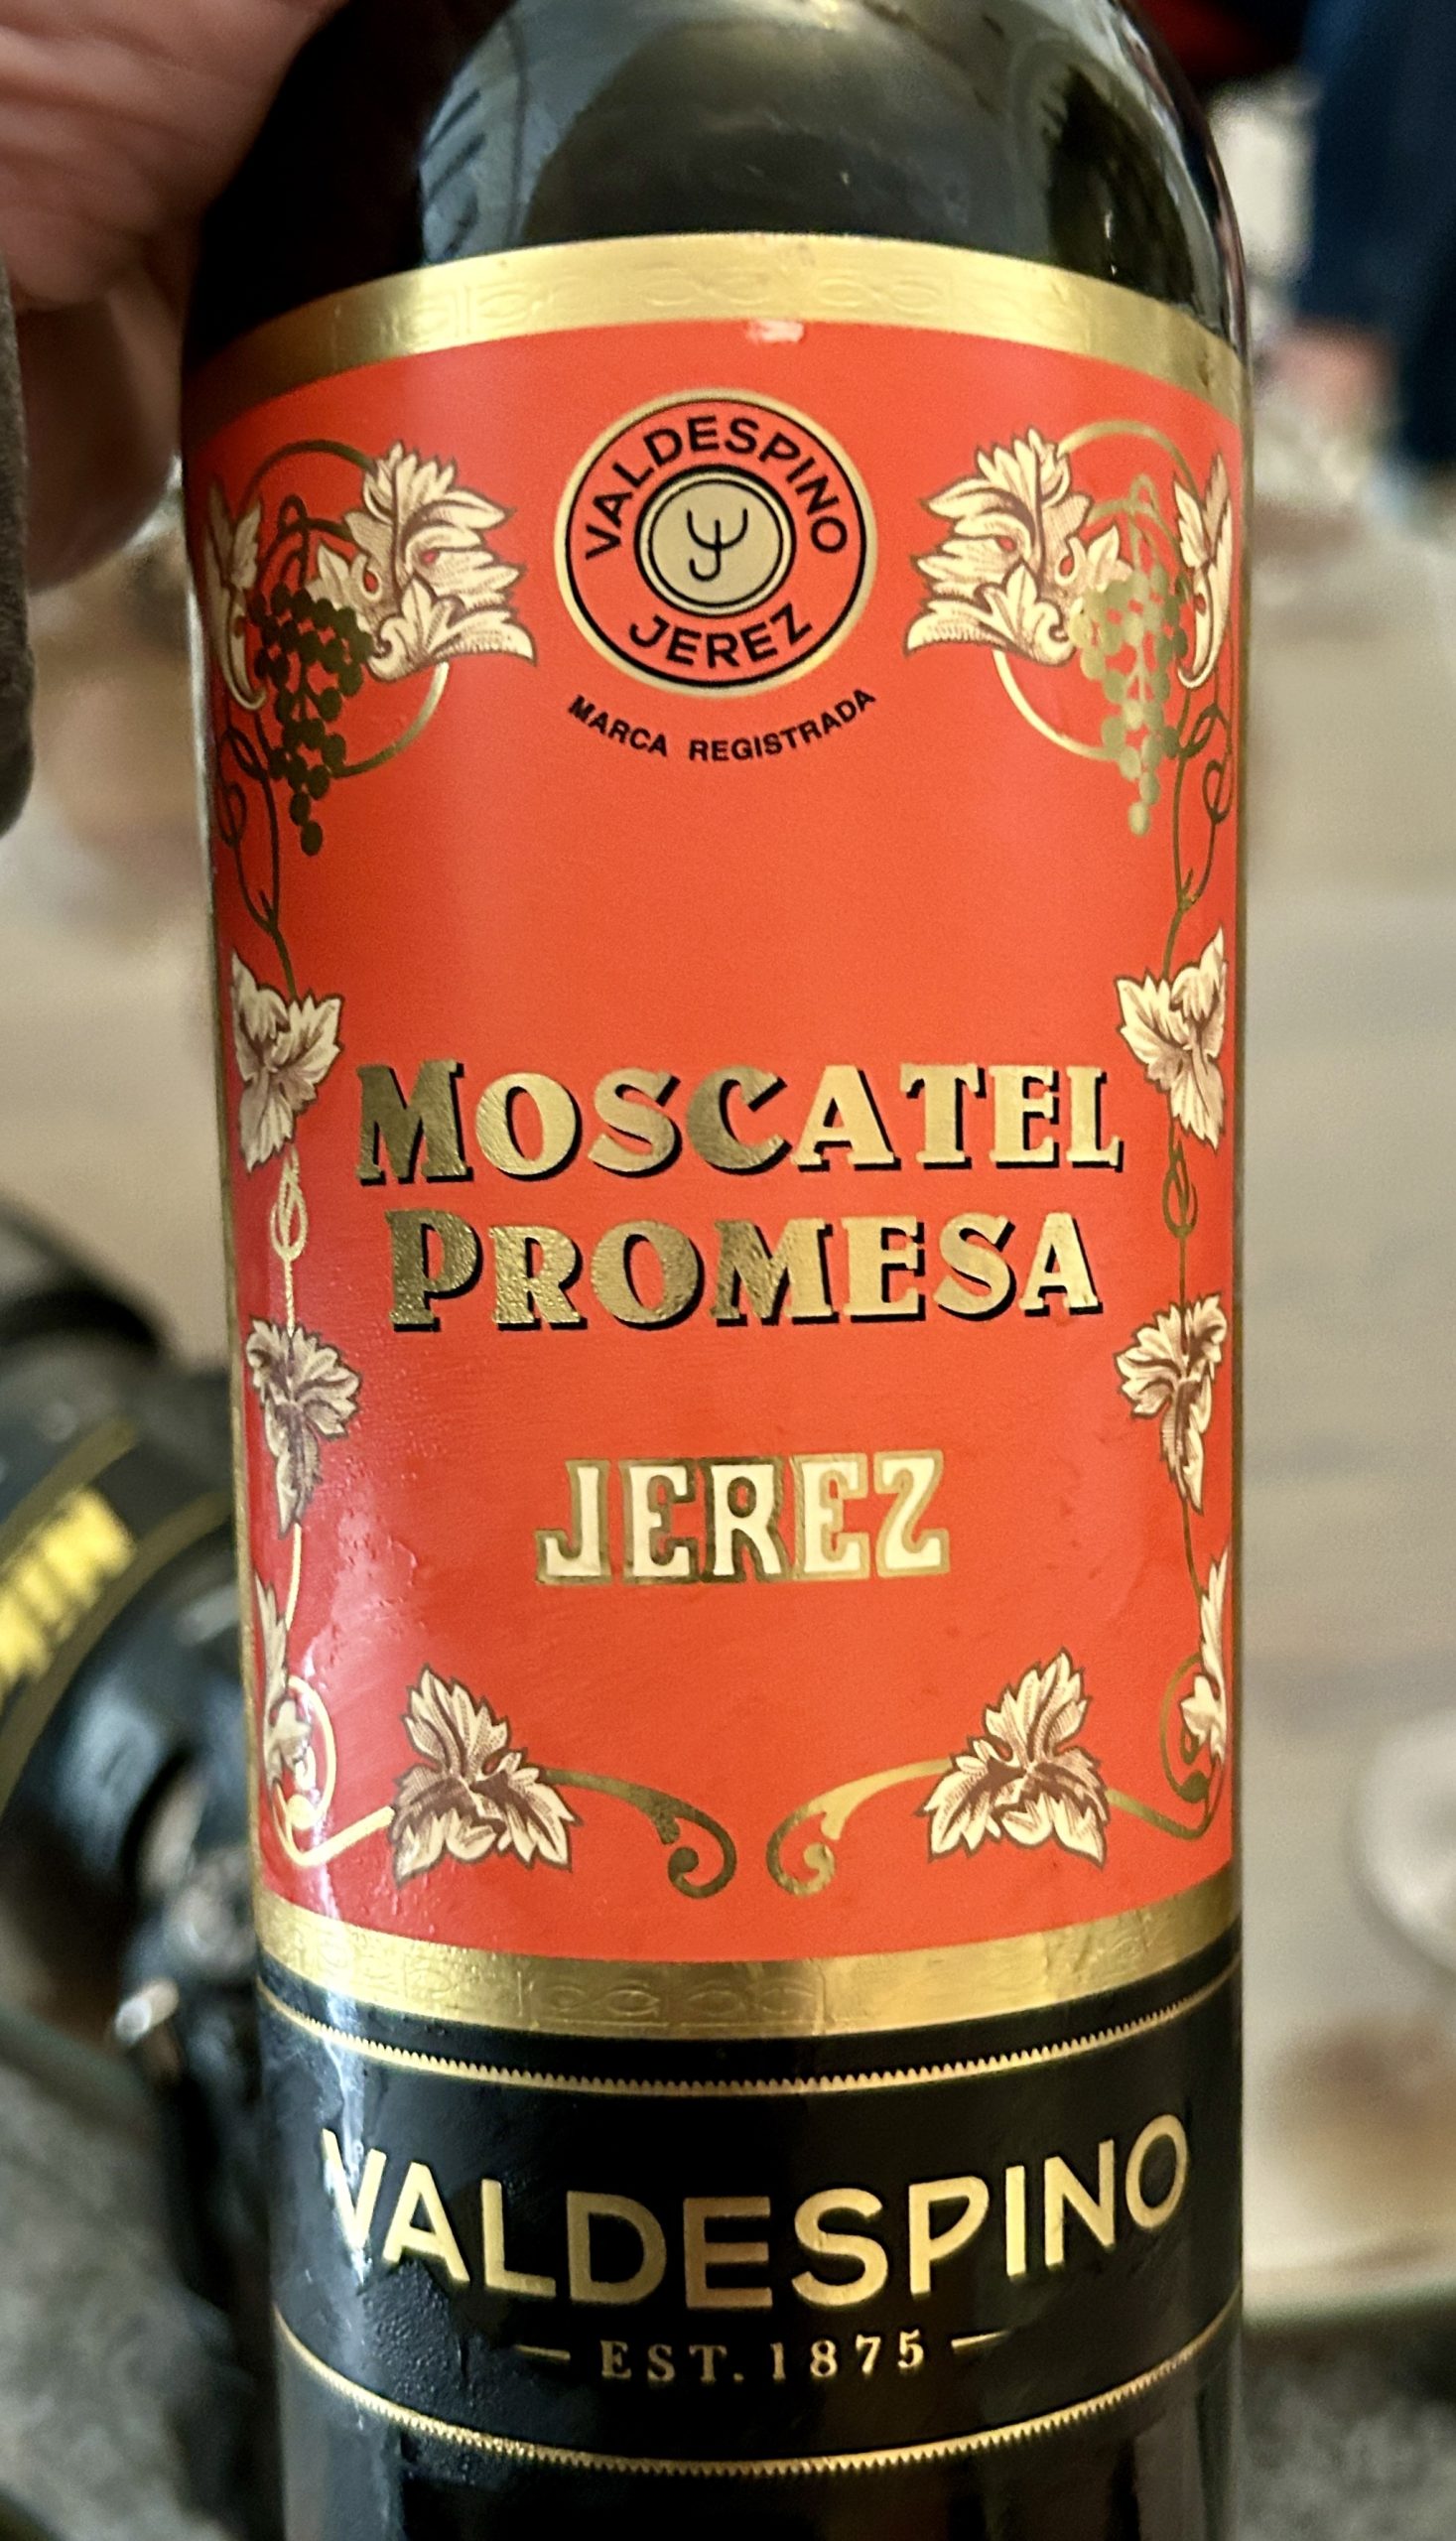 Moscatel Promesa from Jerez